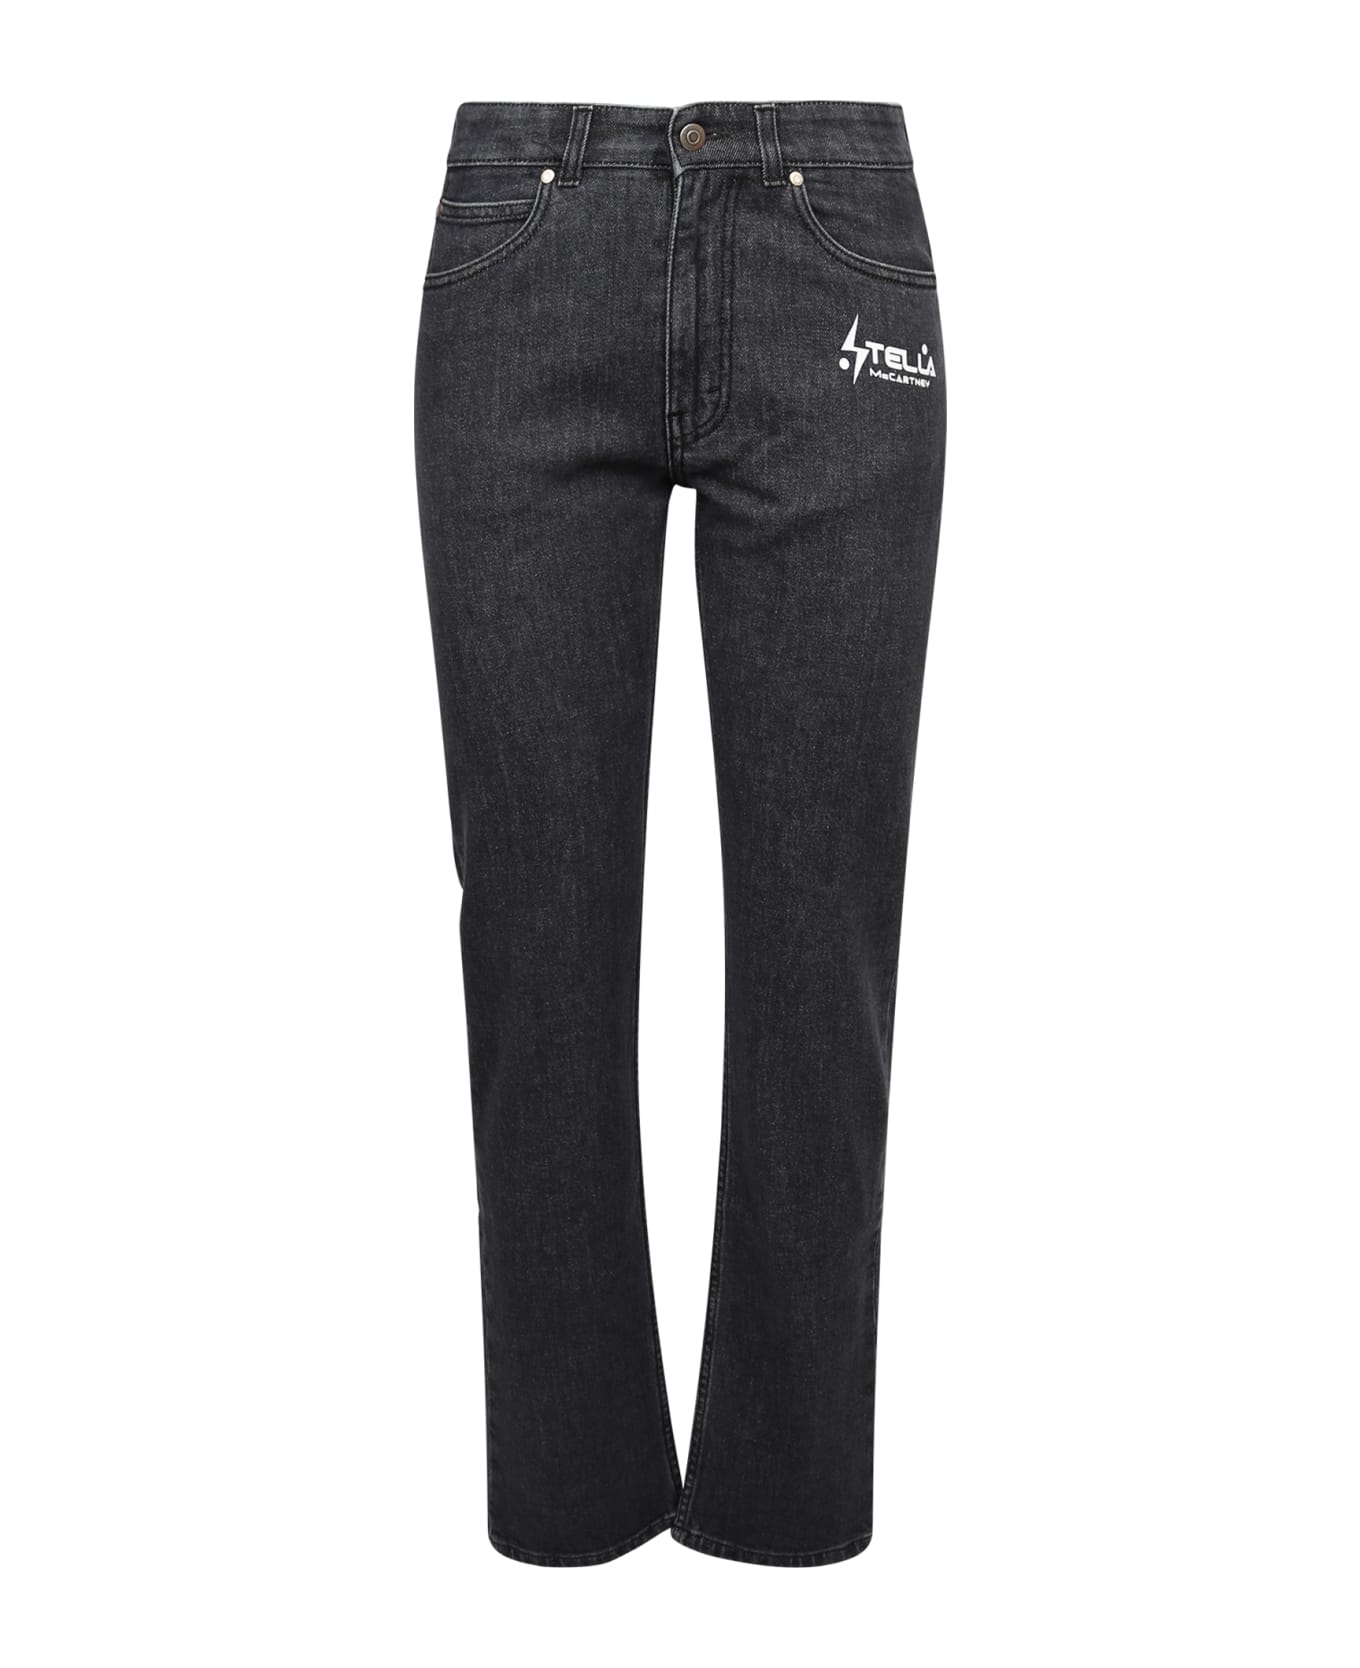 Stella McCartney Jeans Vintage Denim Nero - Black